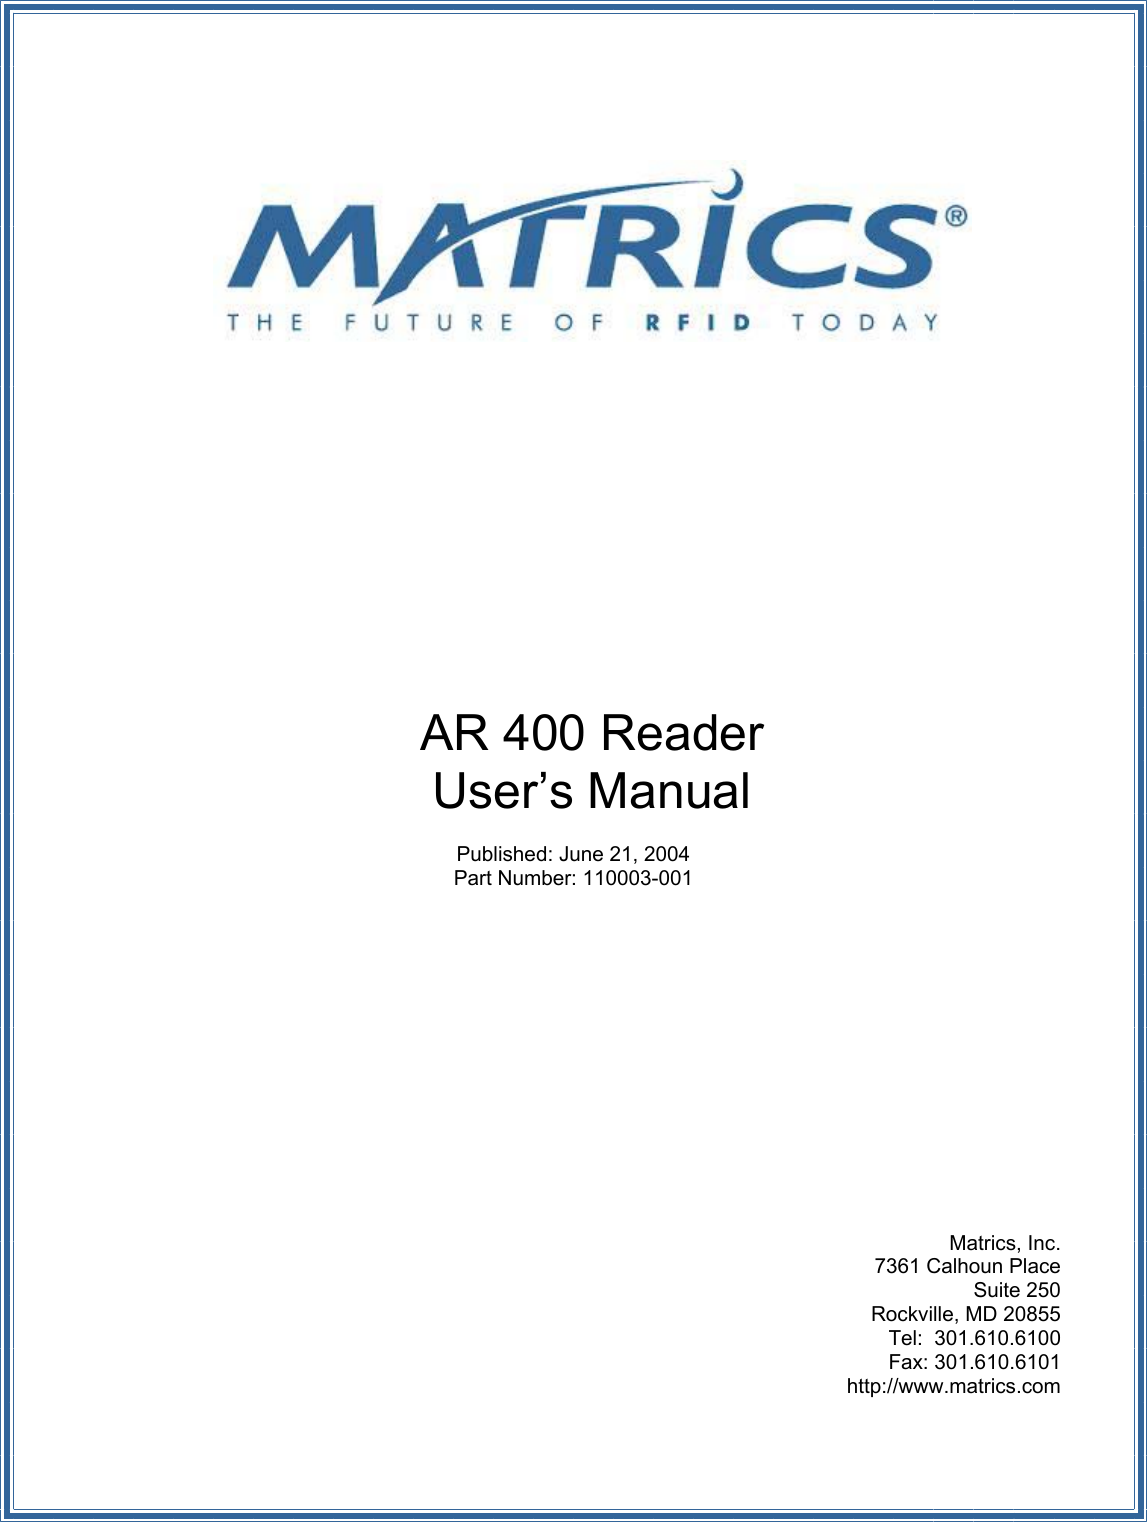                AR 400 Reader User’s Manual  Published: June 21, 2004 Part Number: 110003-001               Matrics, Inc. 7361 Calhoun Place Suite 250 Rockville, MD 20855 Tel:  301.610.6100 Fax: 301.610.6101  http://www.matrics.com 